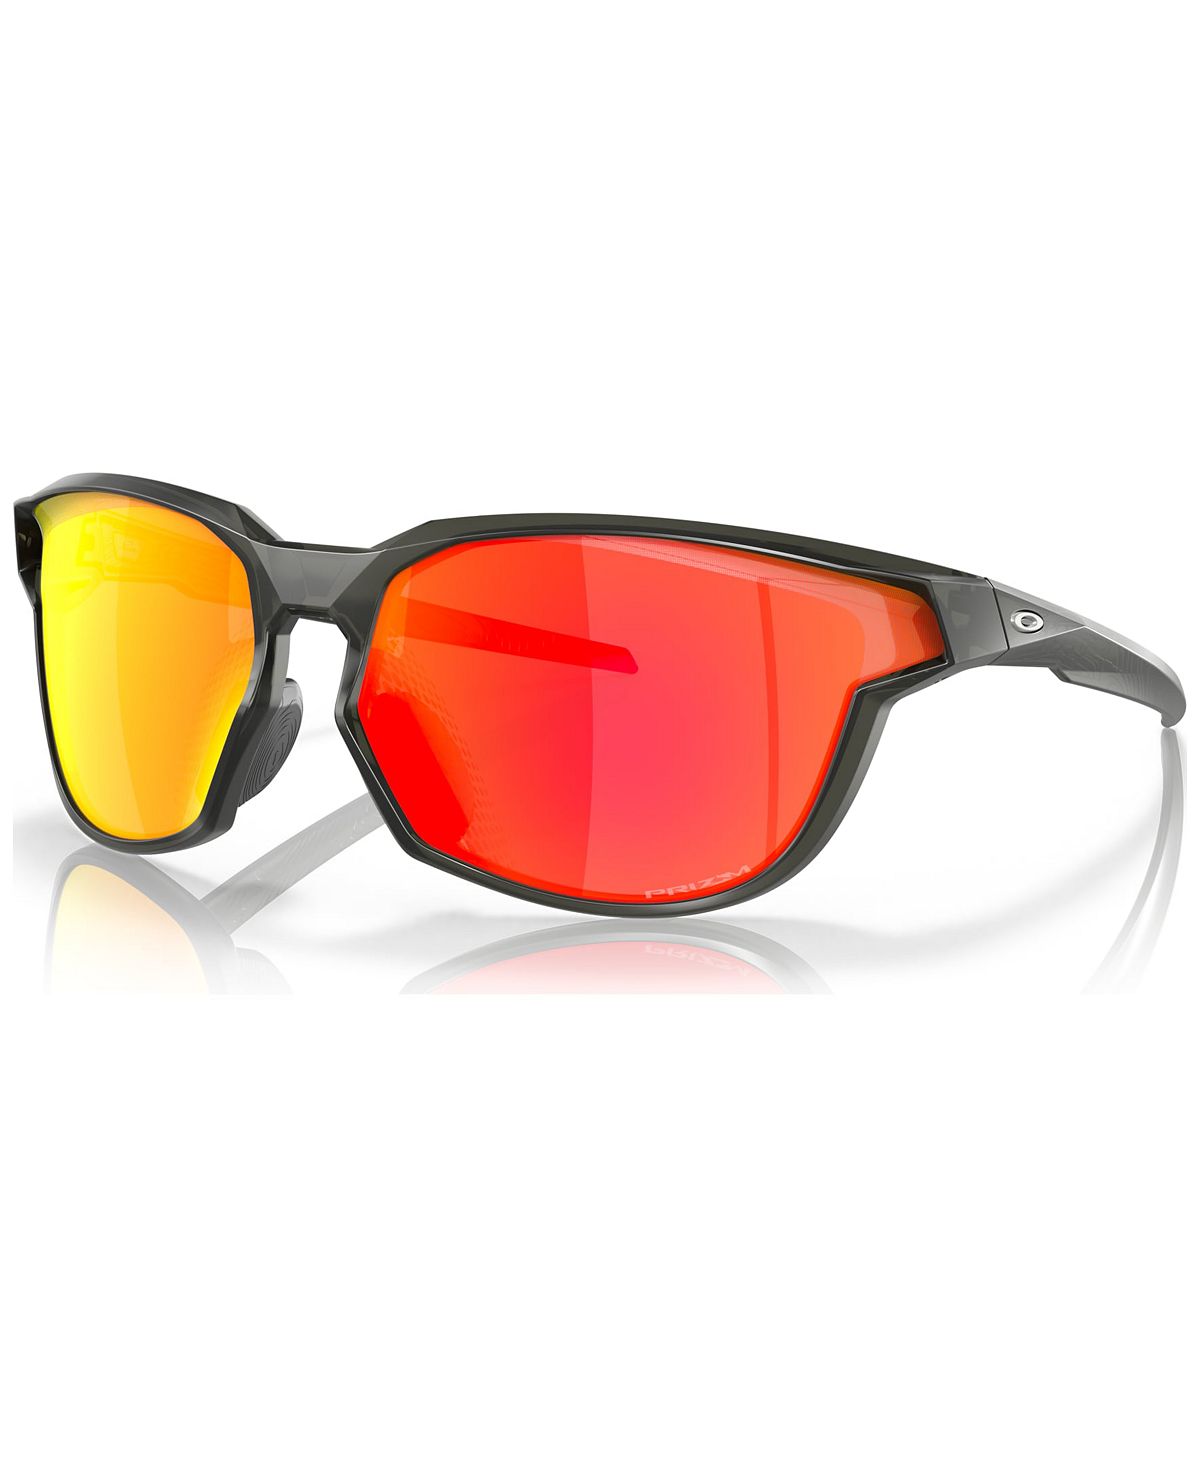 Мужские солнцезащитные очки Kaast, OO9227-0373 73 Oakley